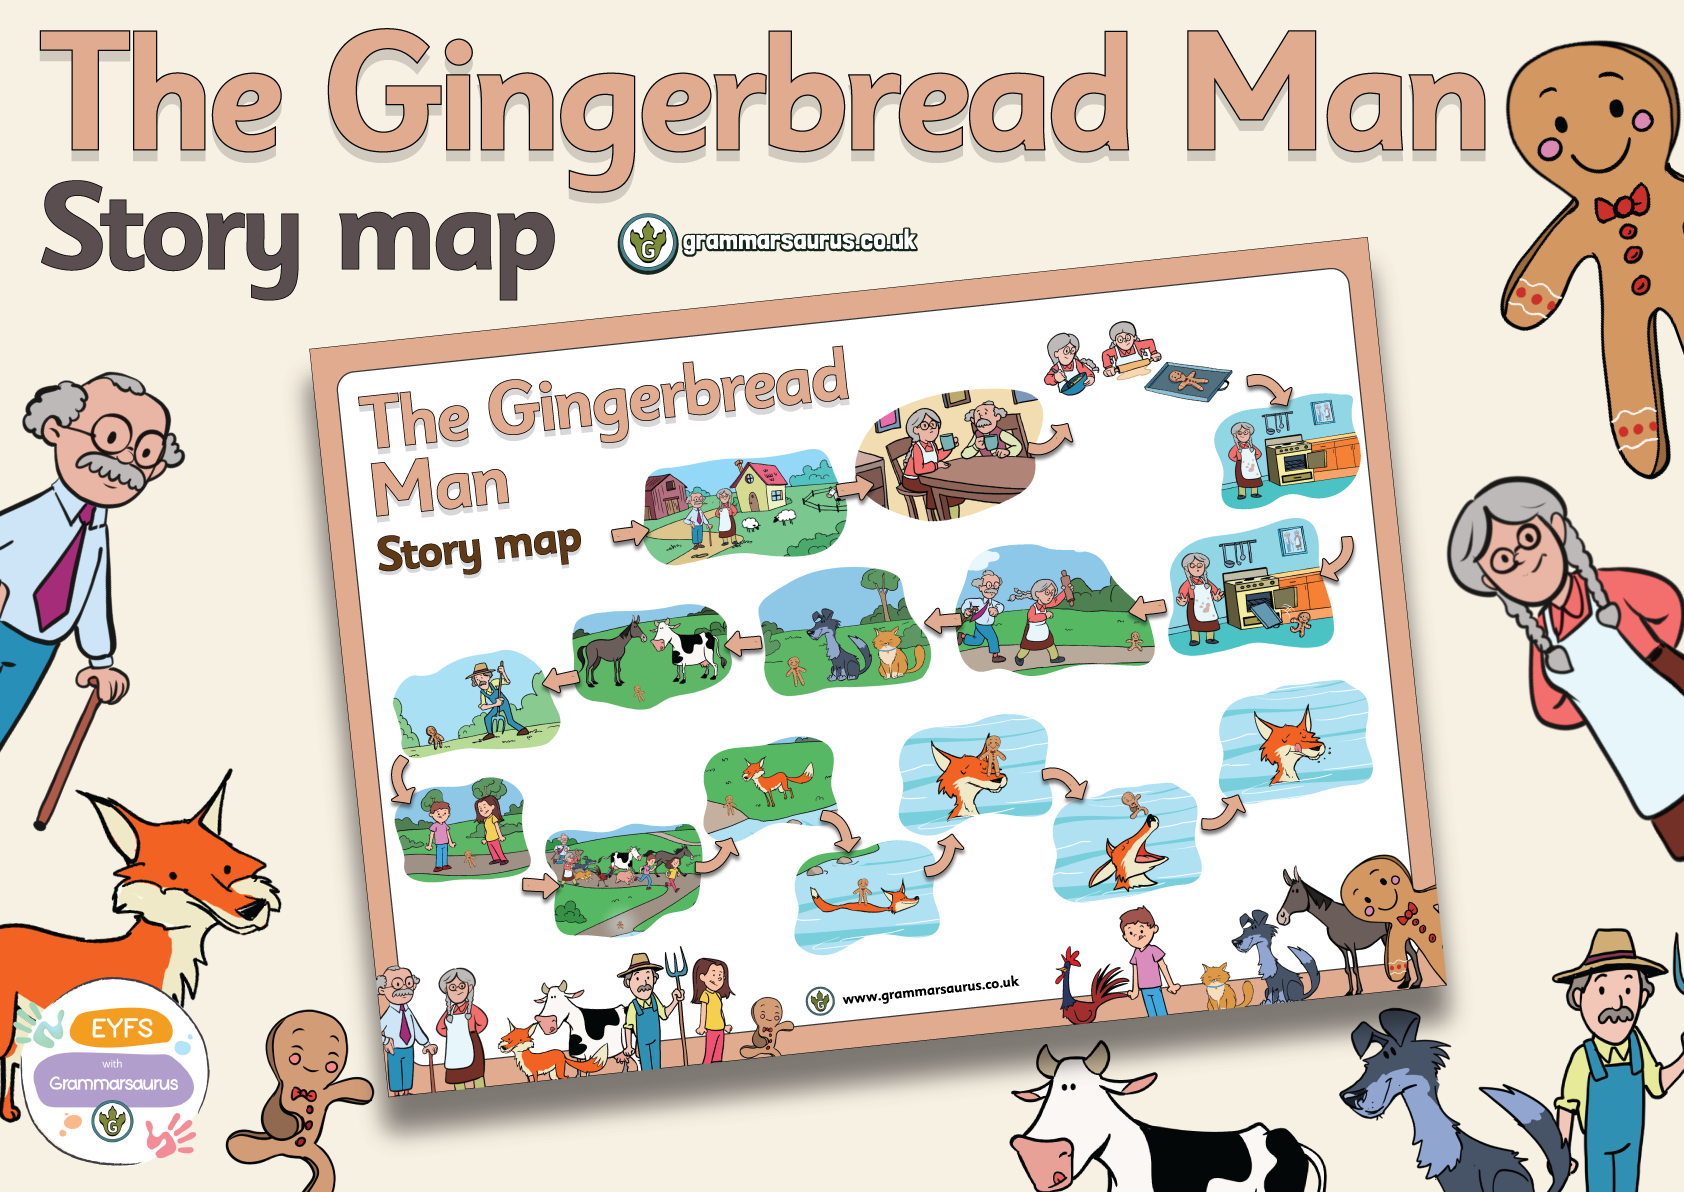 eyfs-the-gingerbread-man-story-map-grammarsaurus-sexiezpicz-web-porn